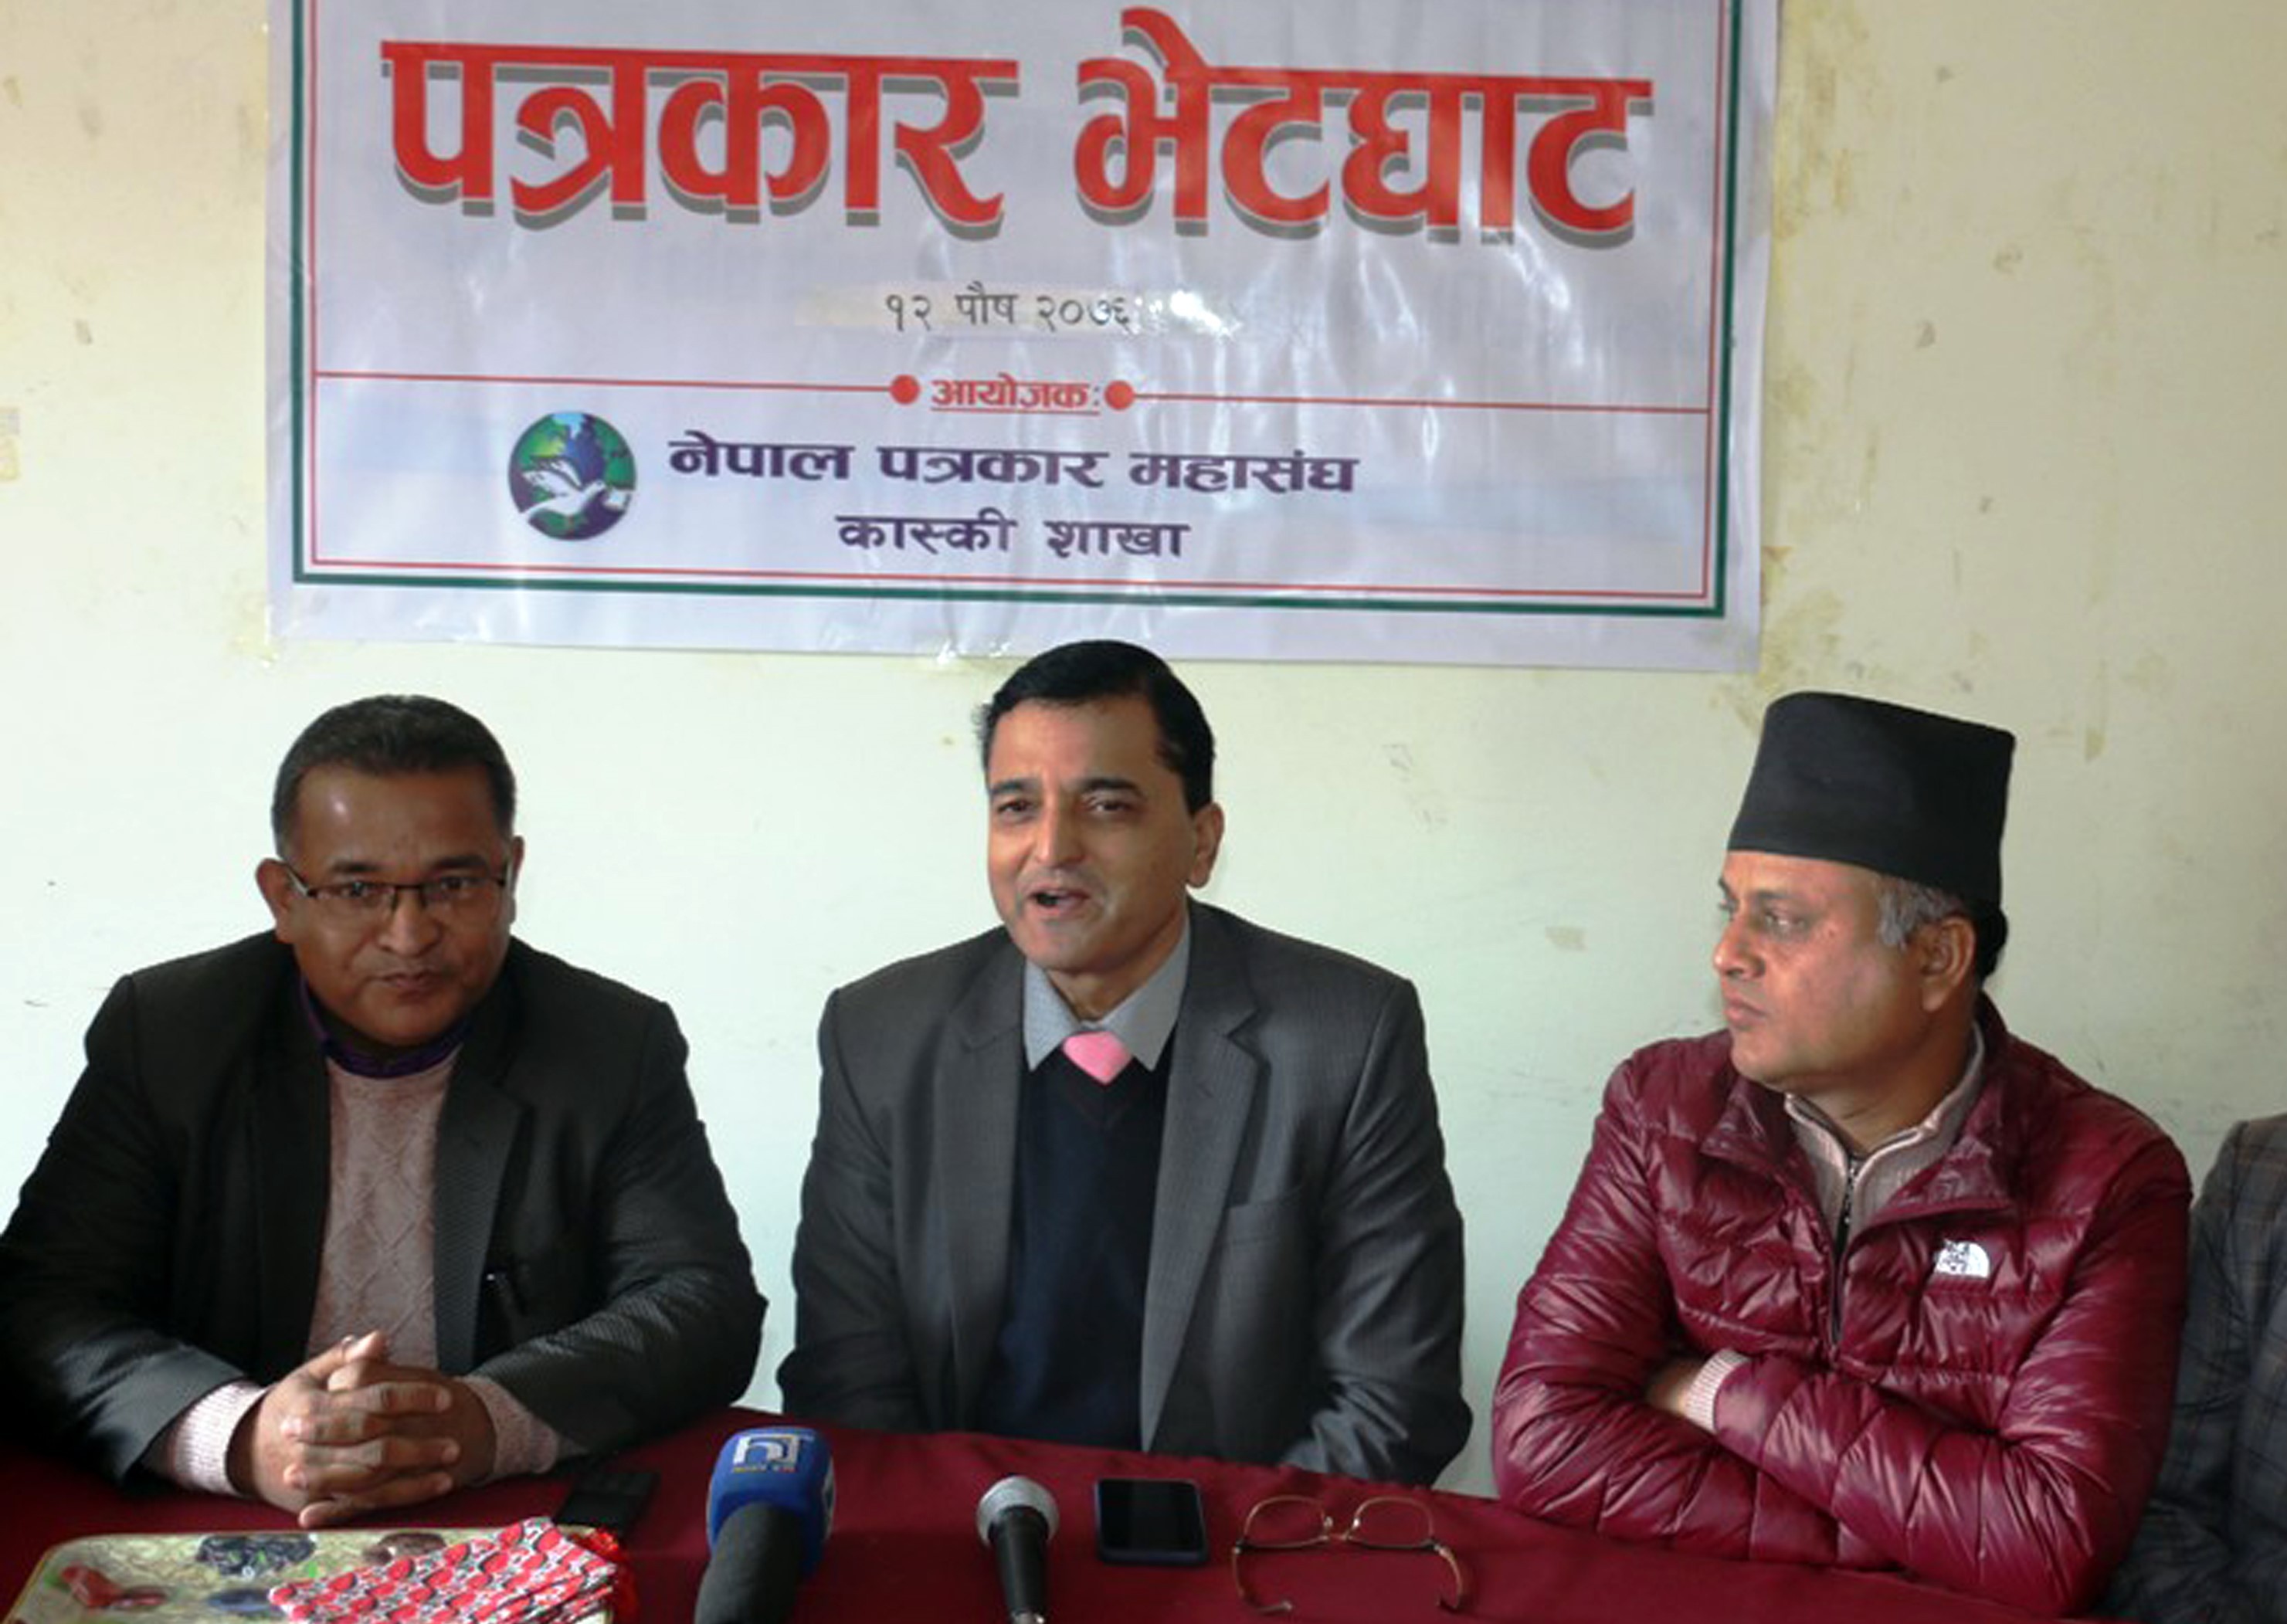 visit-nepal-2020-will-boost-tourism-minister-bhattarai